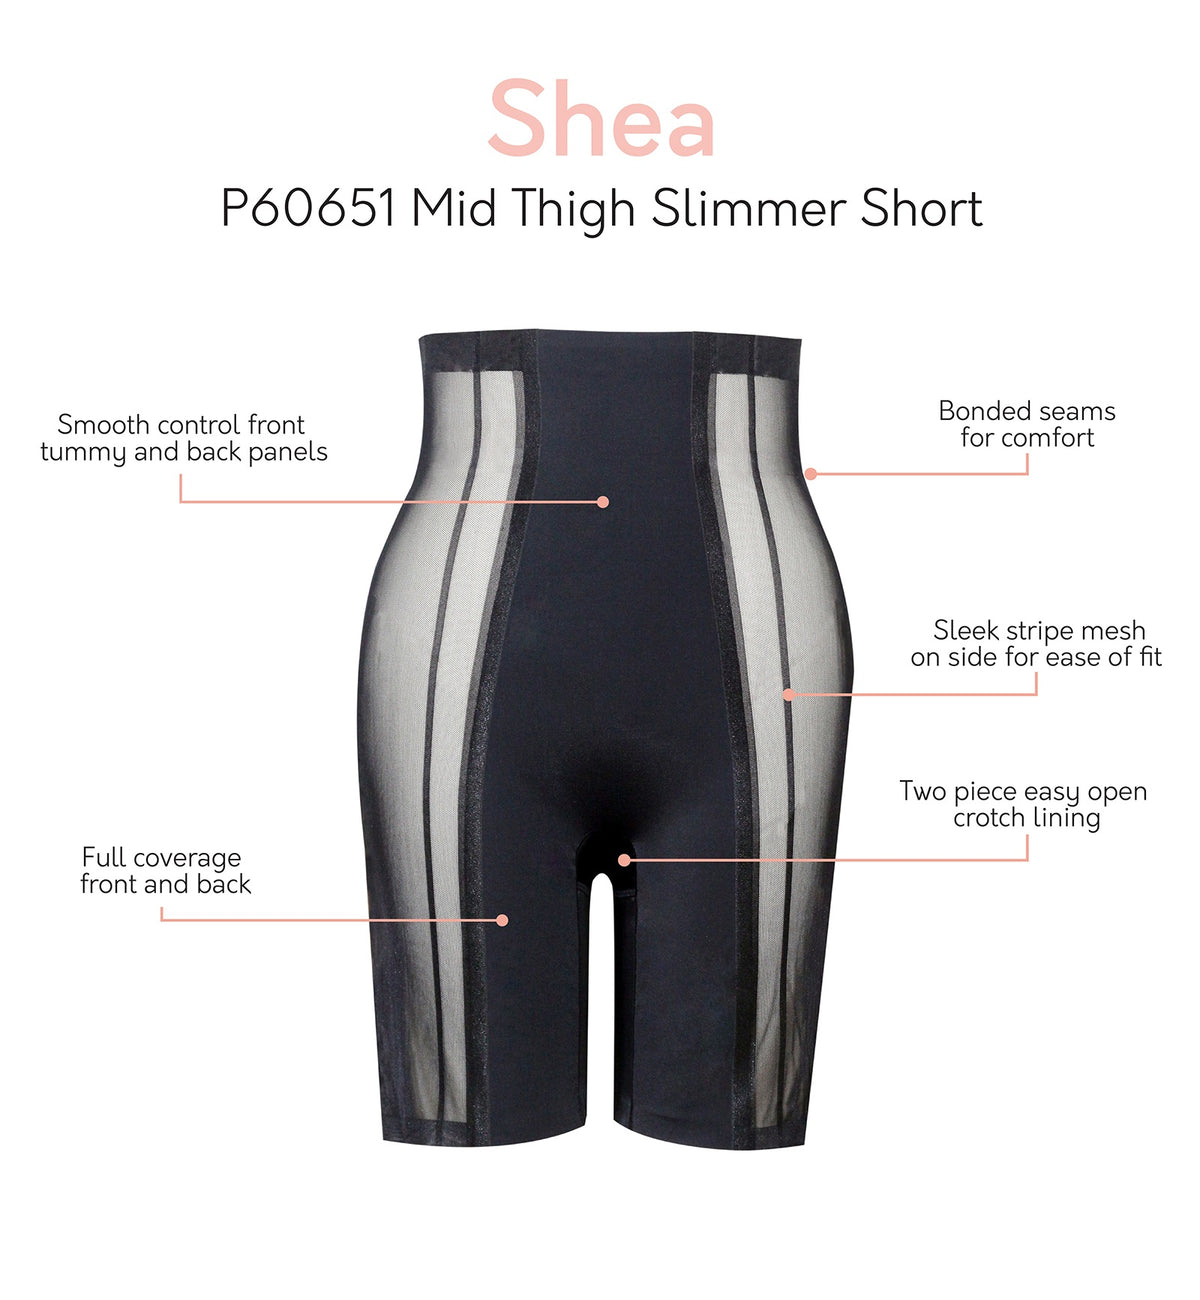 Parfait Shea Mid Thigh Slimmer Short (P60651),Small,Black - Black,Small